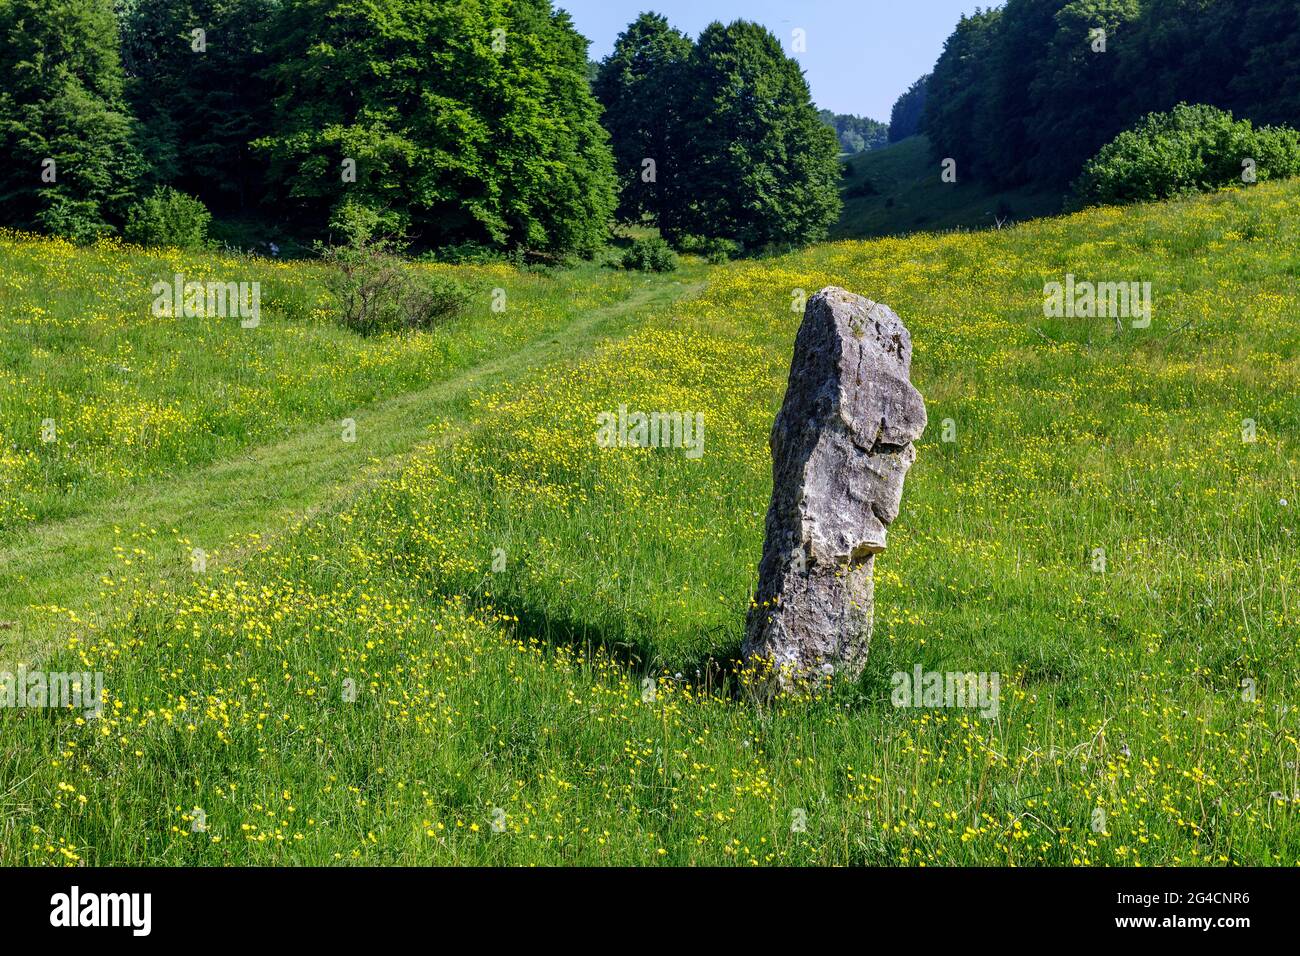 Stone sculpture on a mountain path Stock Photo